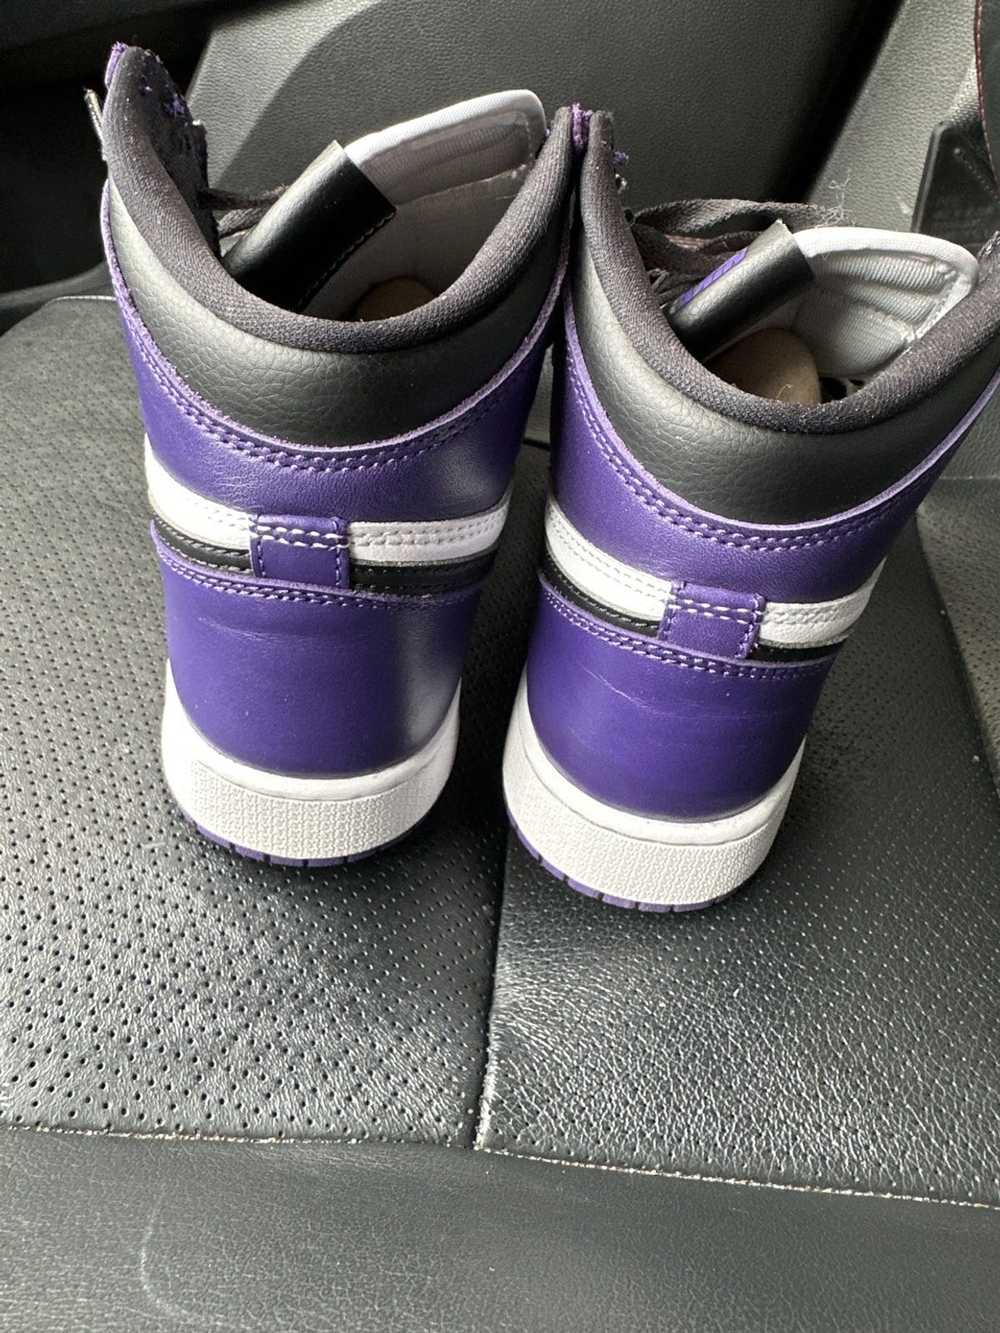 Jordan Brand Air Jordan 1 Hi OG “Court Purple 2.0” - image 4